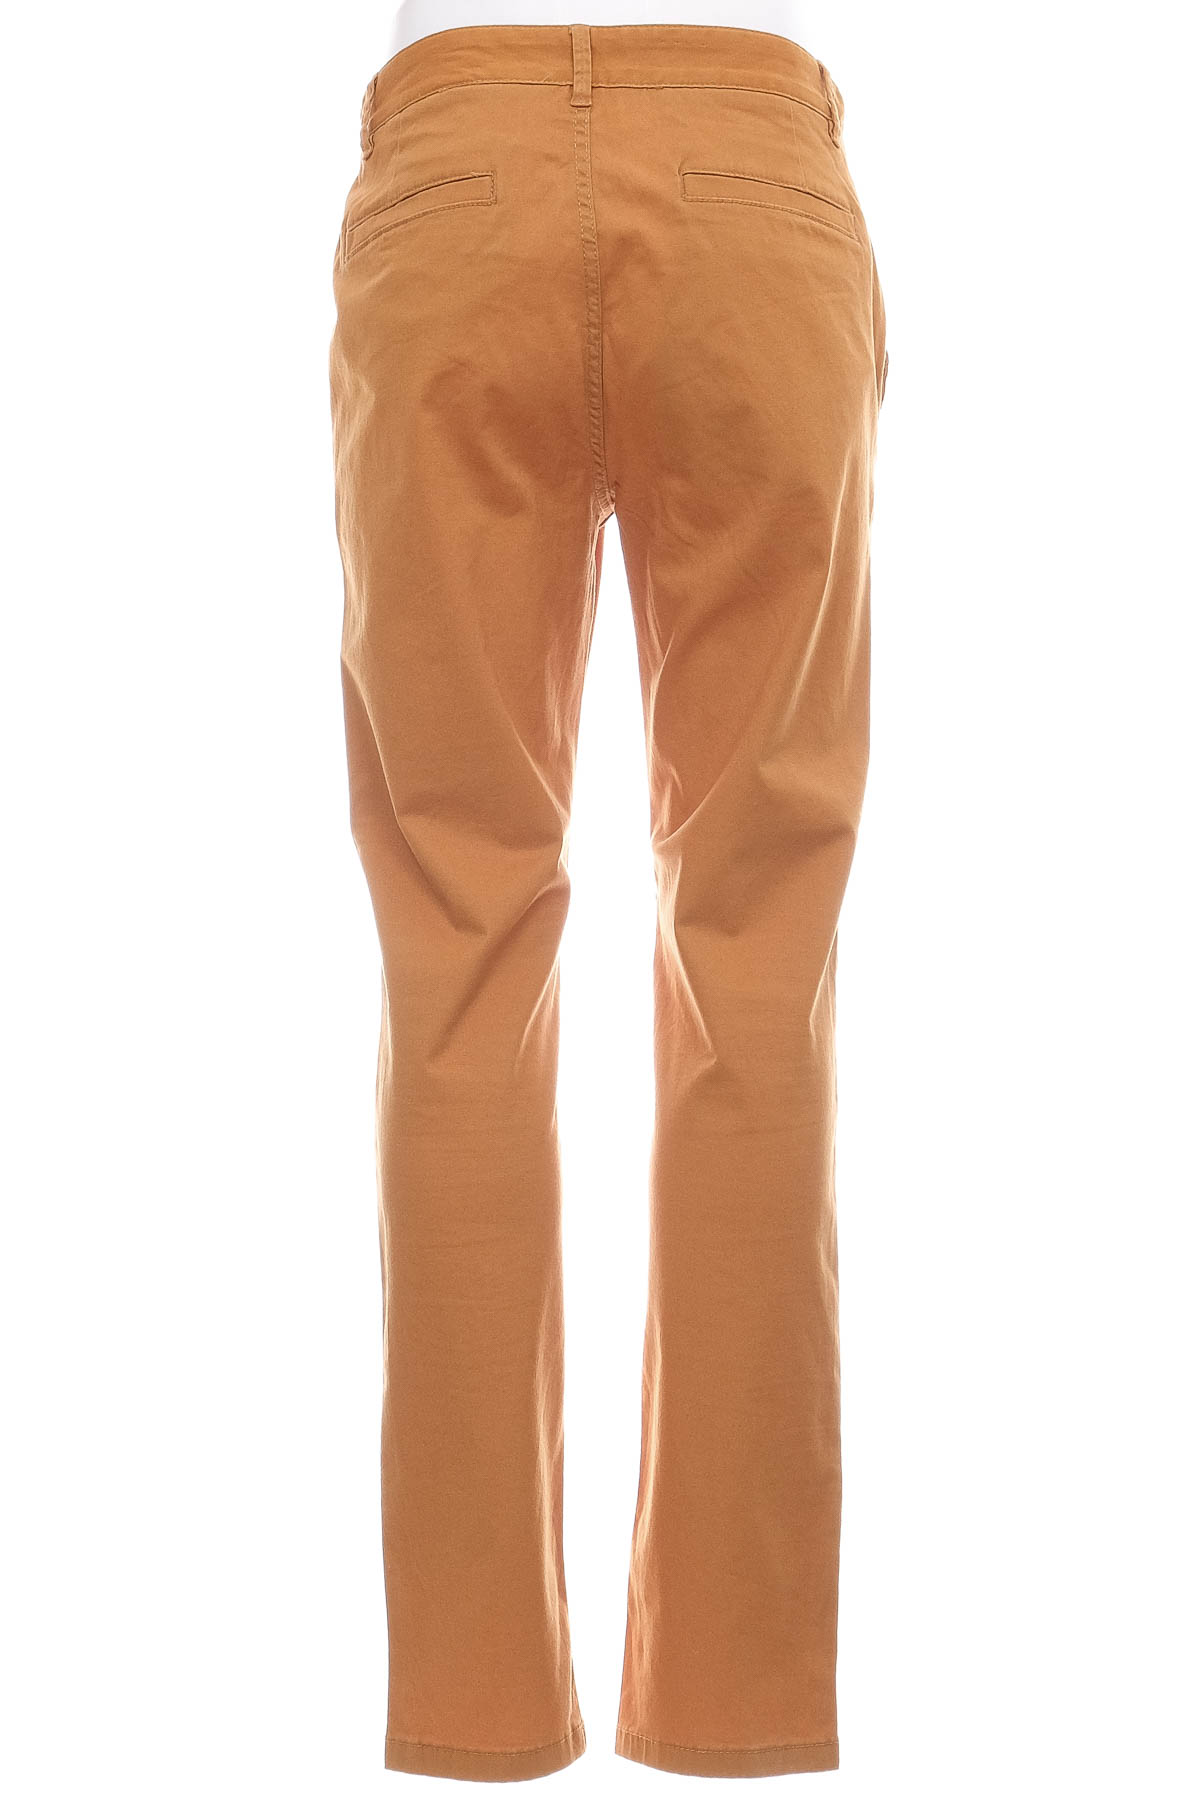 Men's trousers - KIABI - 1